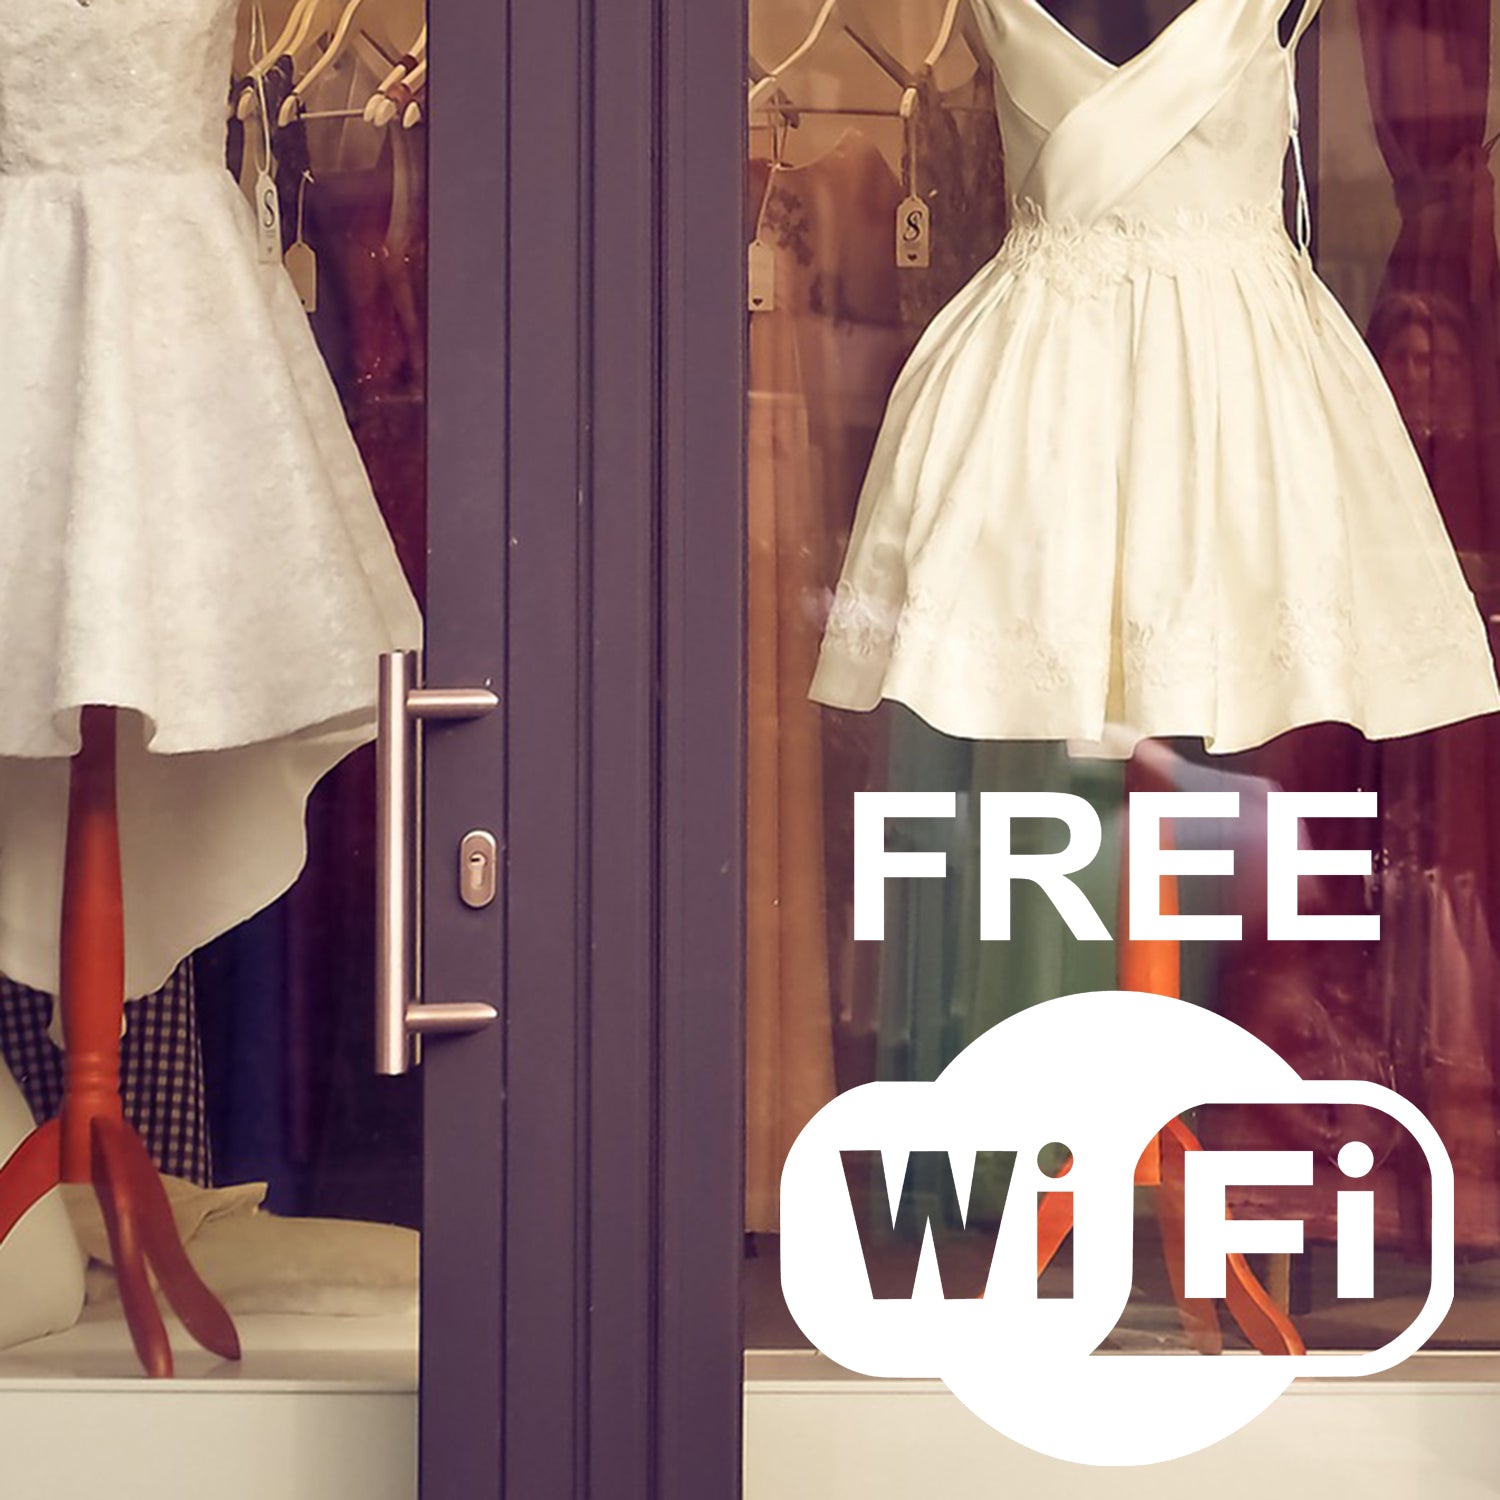 Free wi-fi | Shop window decal - Adnil Creations